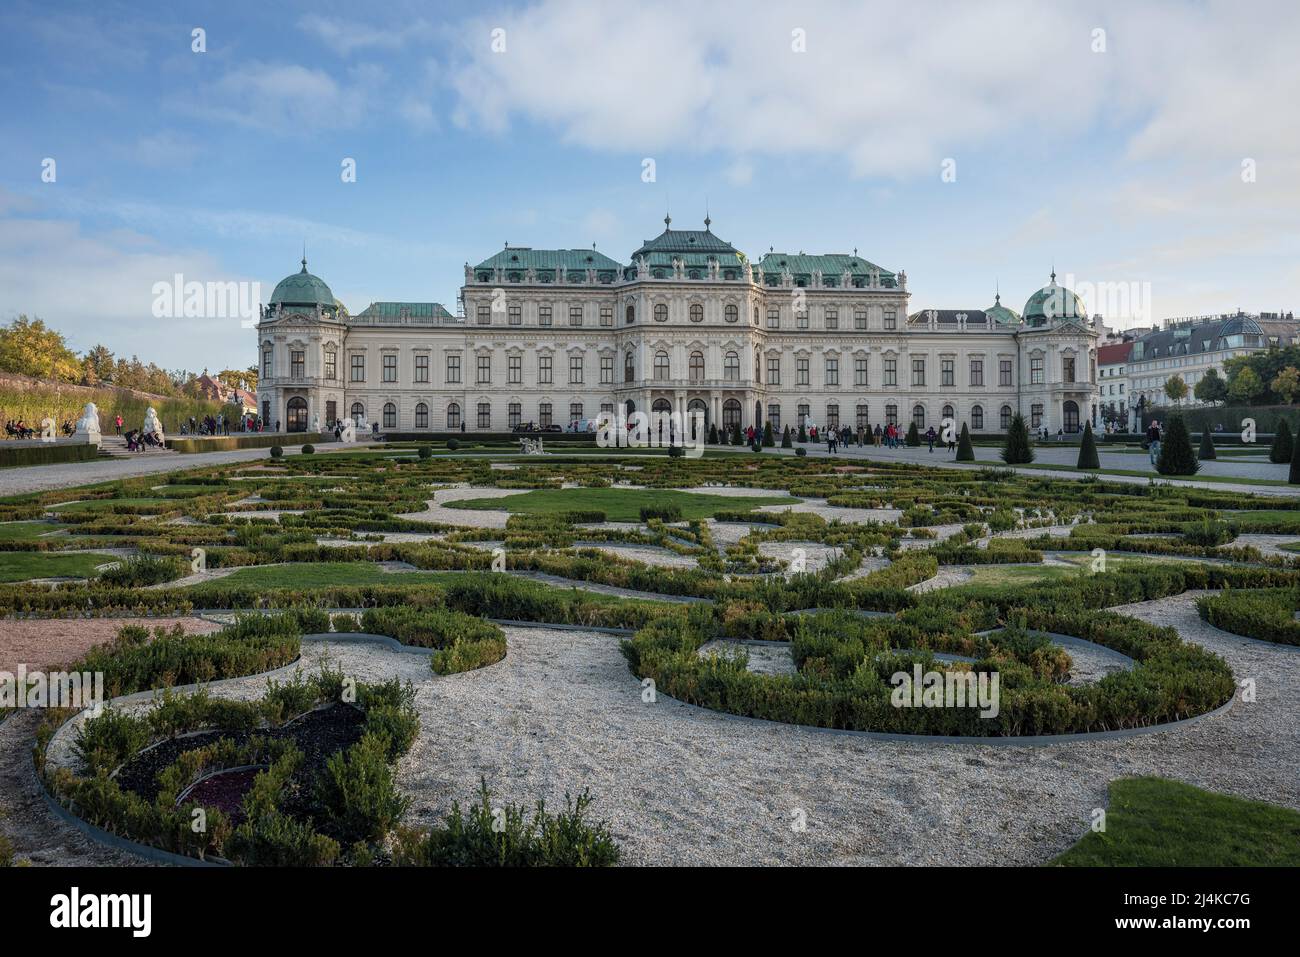 Belvedere Palace - Vienna, Austria Stock Photo